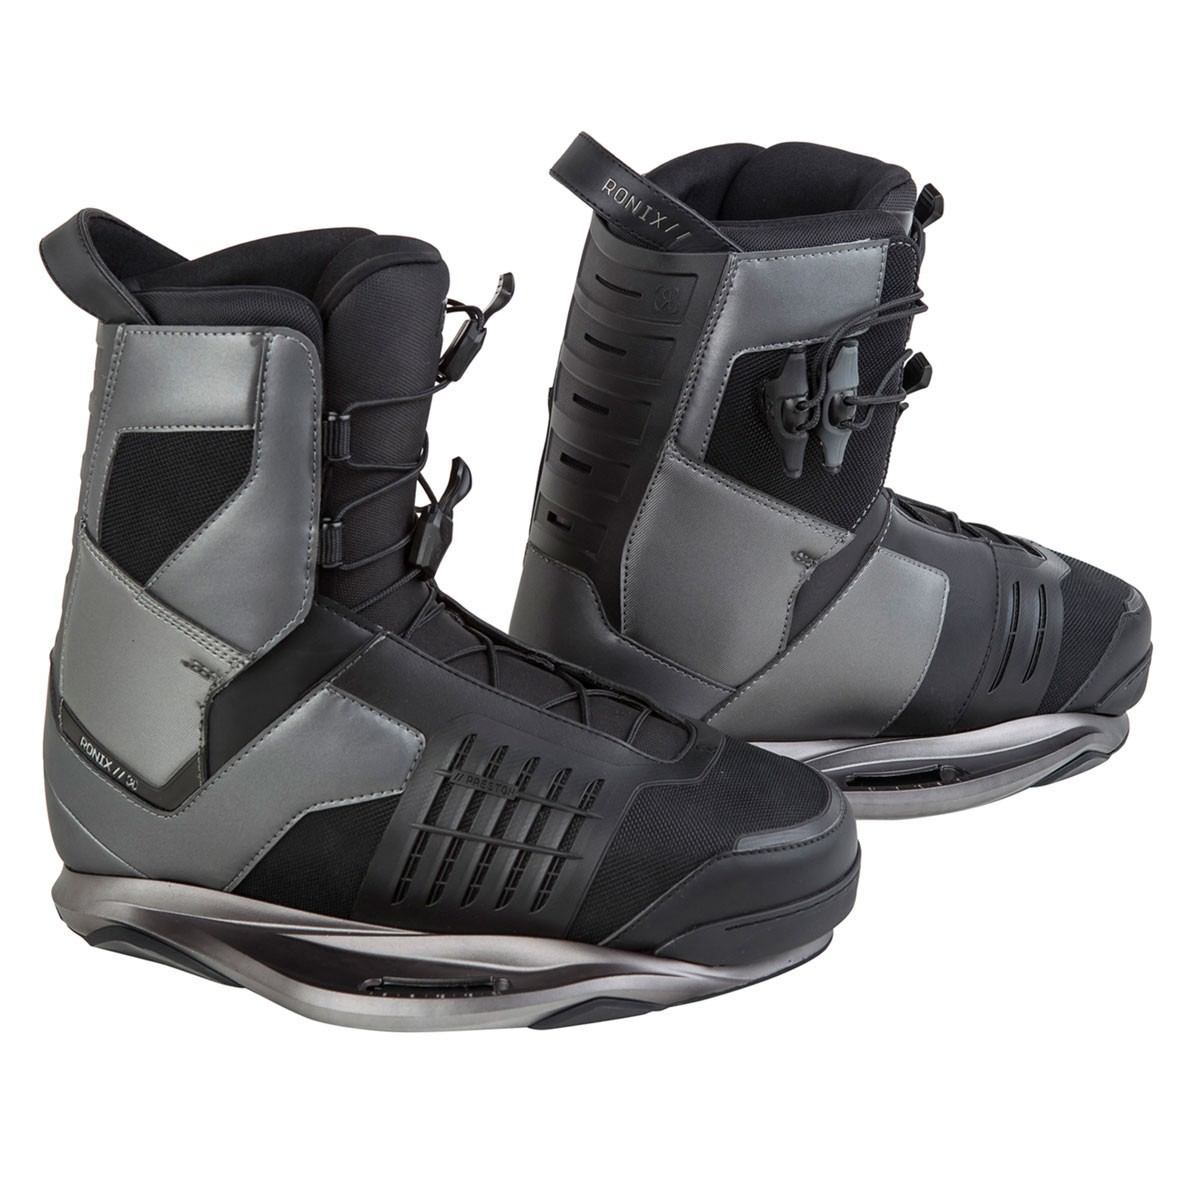 2015-ronix-boots-preston-black-02